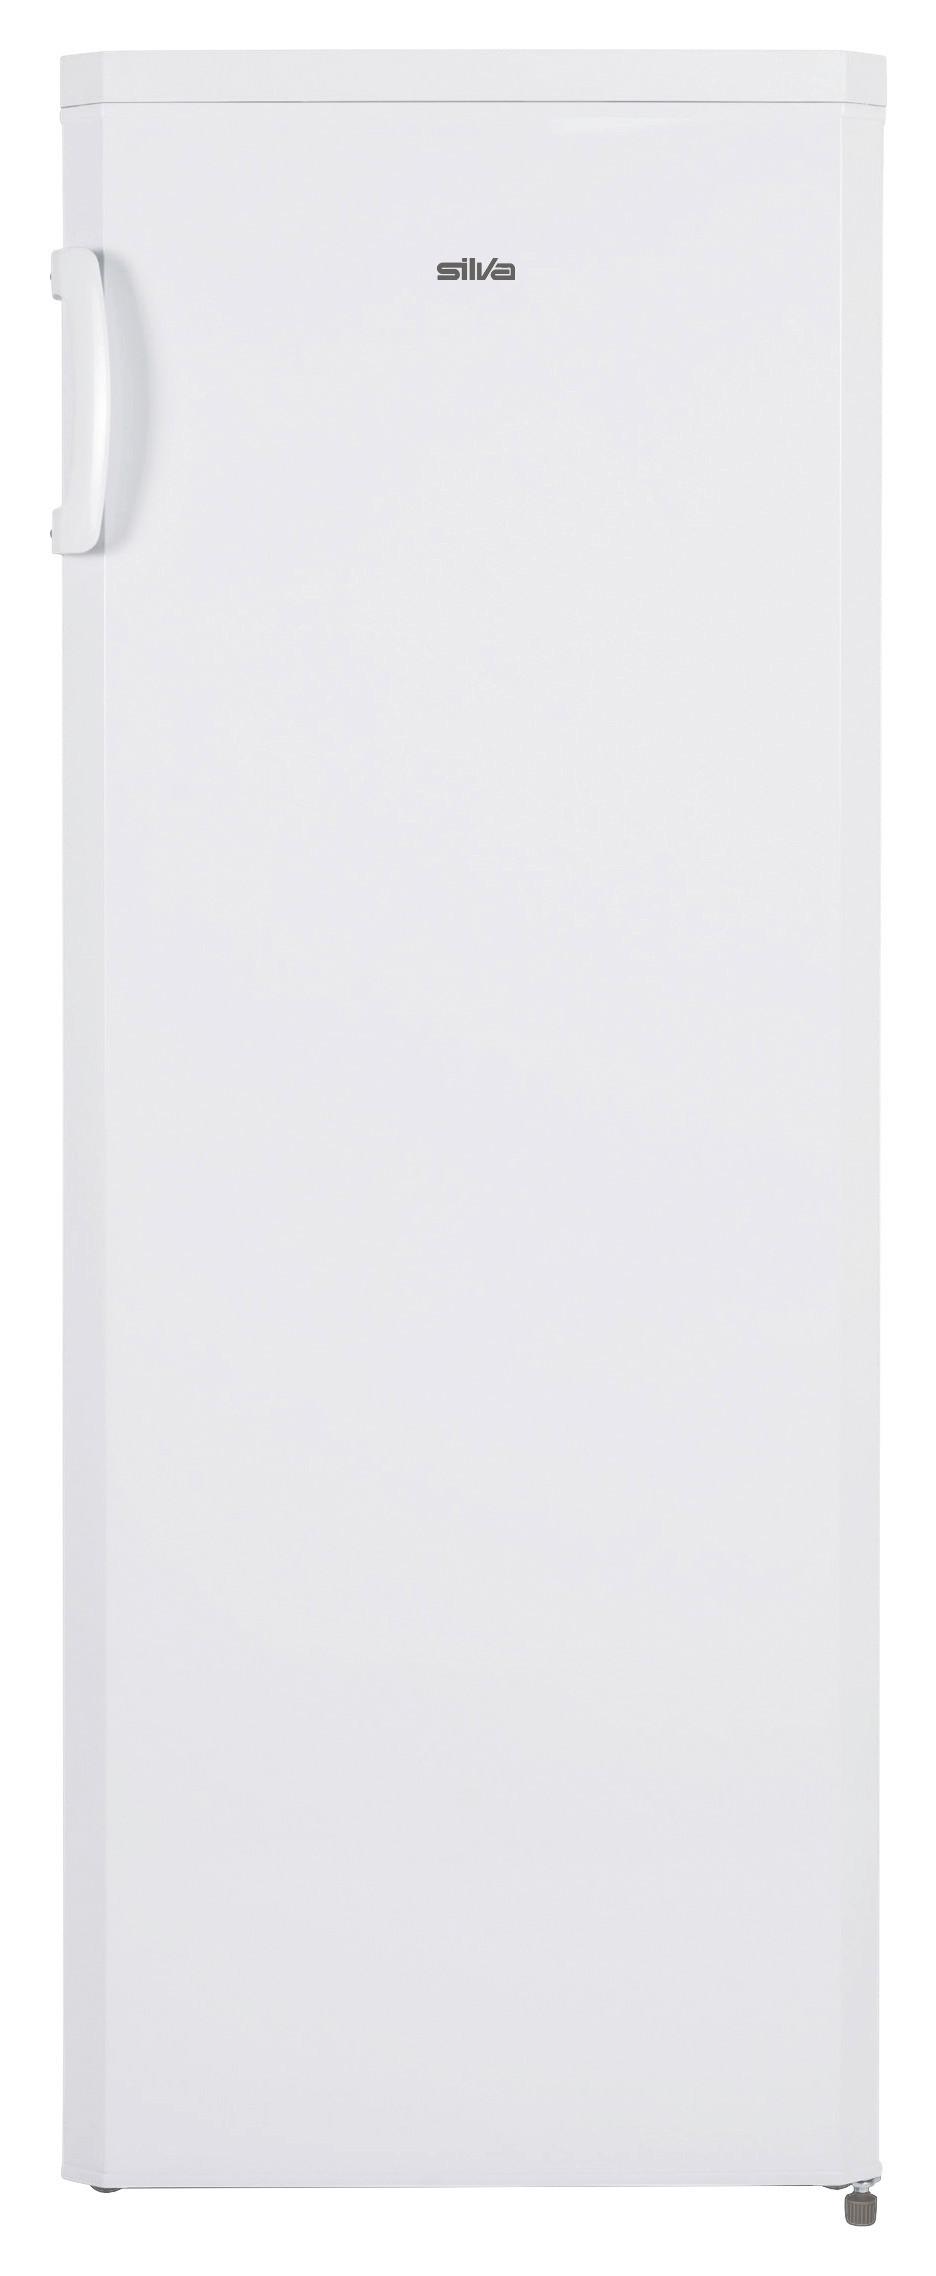 Getränkekühler G-Ks 2295 - Weiß, Basics (55/143/58cm) - Silva Schneider